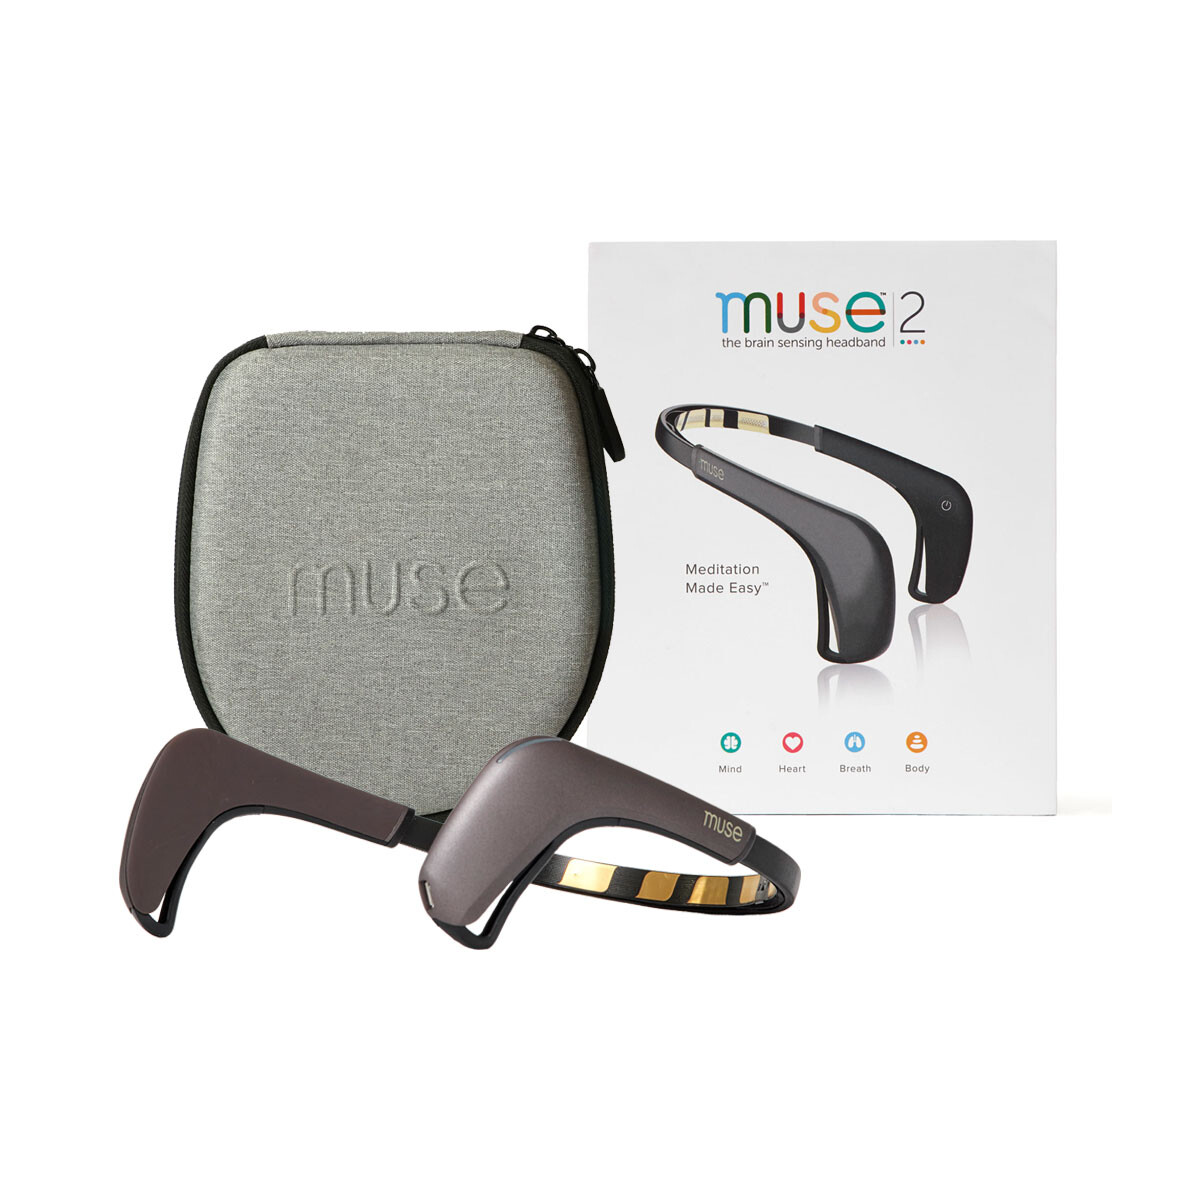 The Brain Sensing Headband Meditation MultiSensor Headset Muse 2 New in Box 